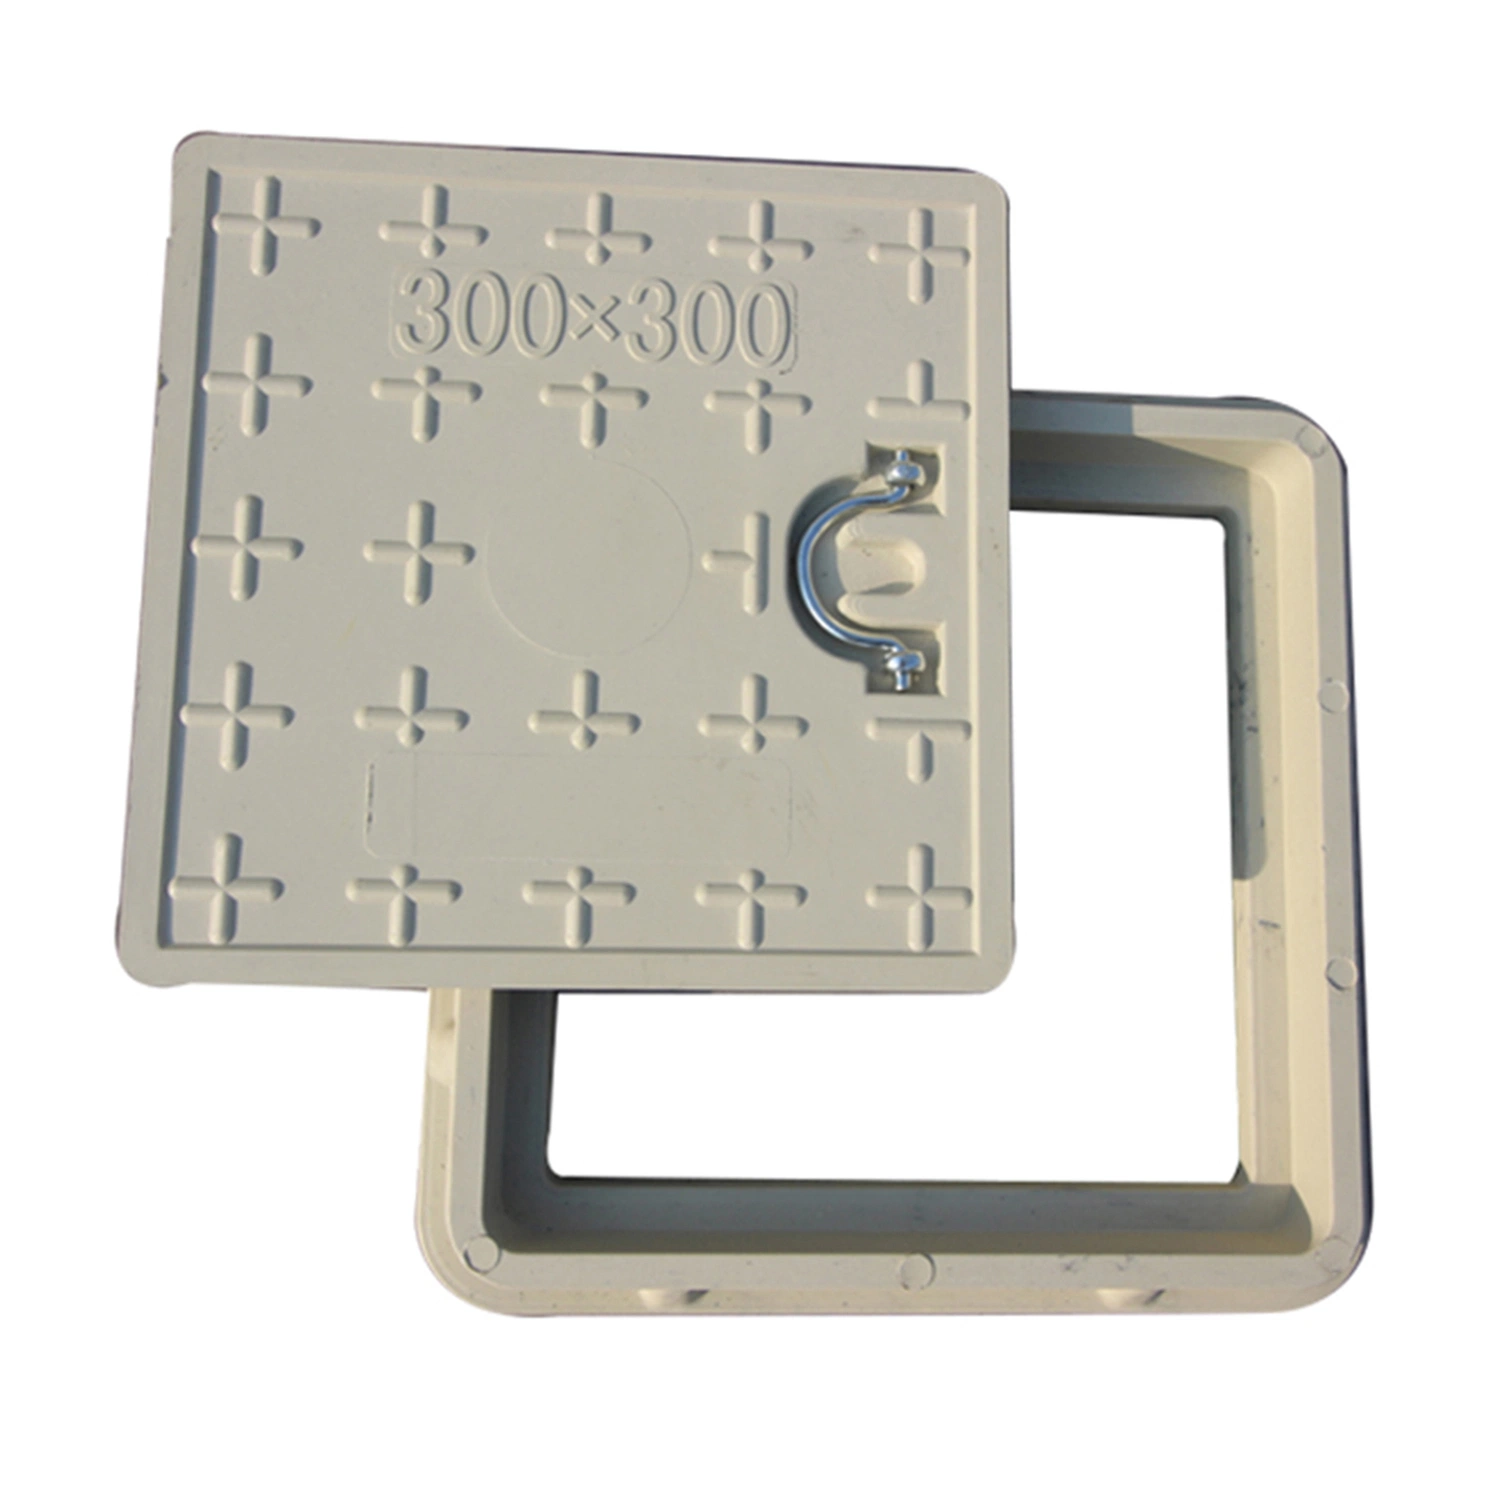 BMC 300X300 ISO9001 Passed Manhole Cover